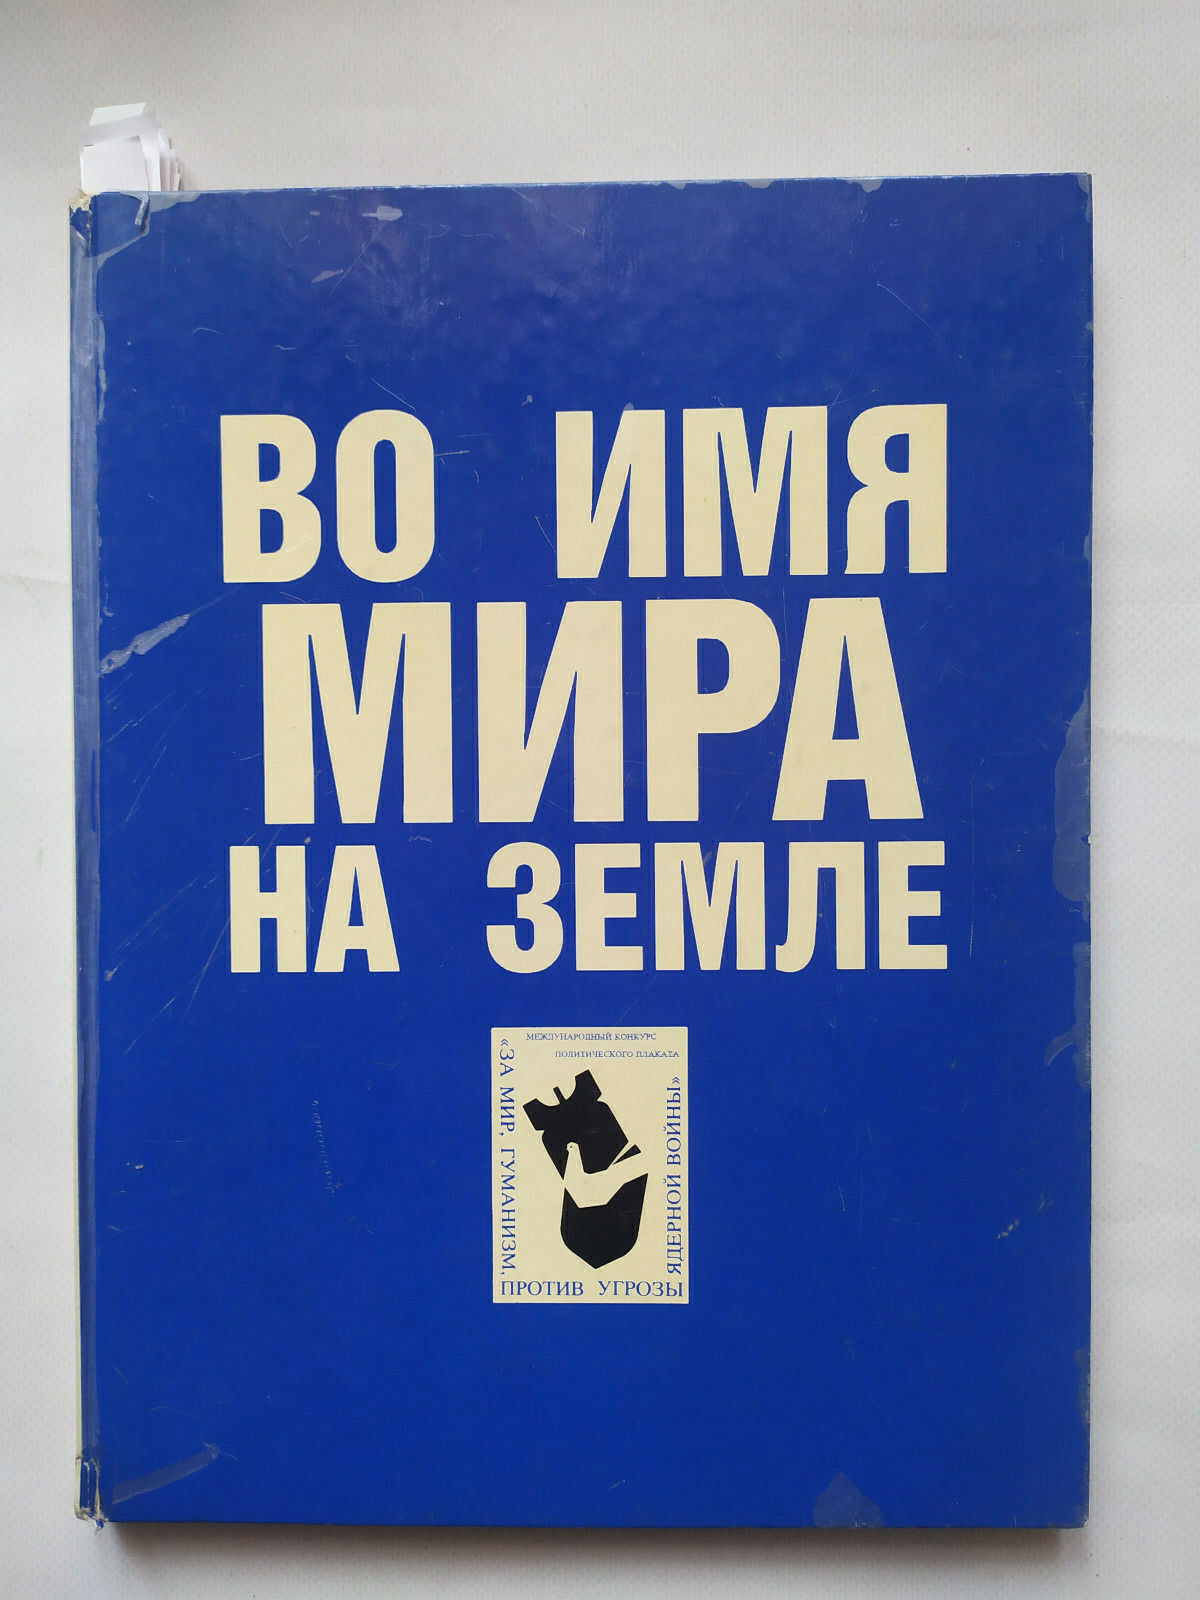 1986 Photo album Cold War Poster Plakat Art Propaganda Graphics Russian Book 